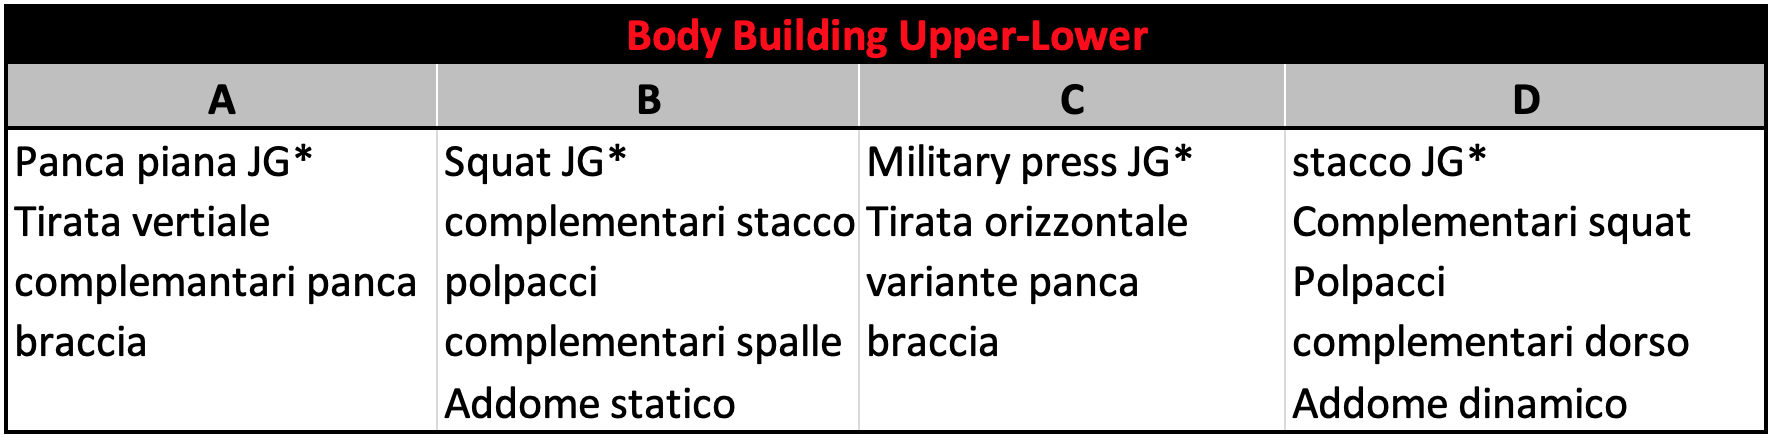 Body Building Upper-Lower